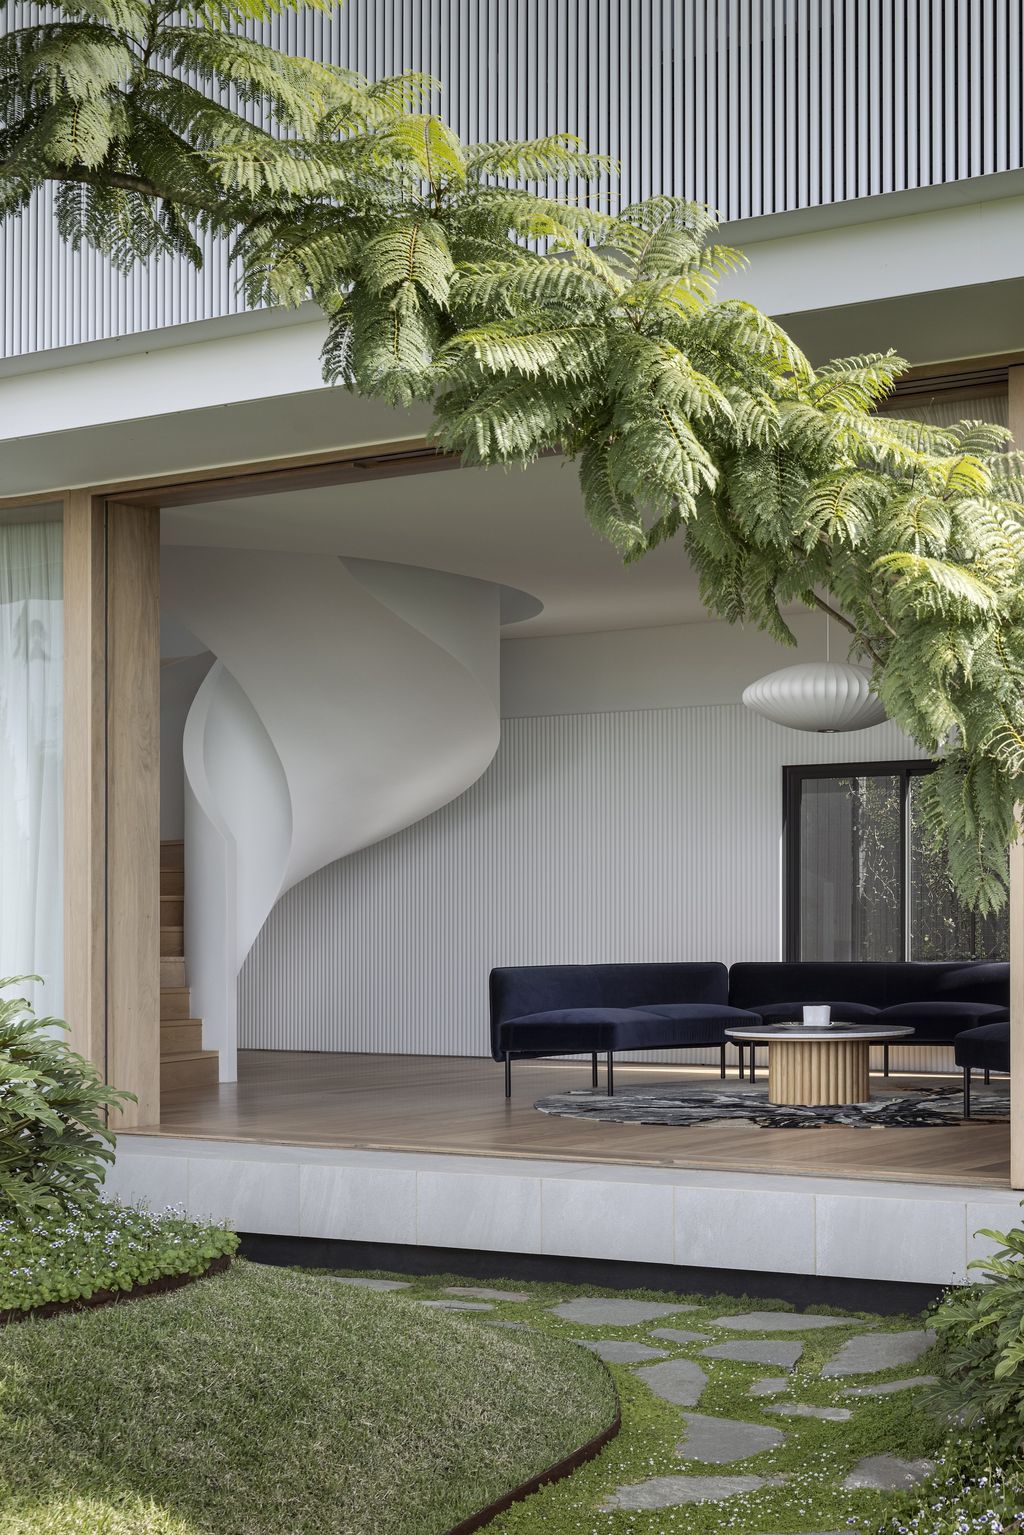 Boomerang House with Subtle, Captivating Design by Joe Adsett Architects